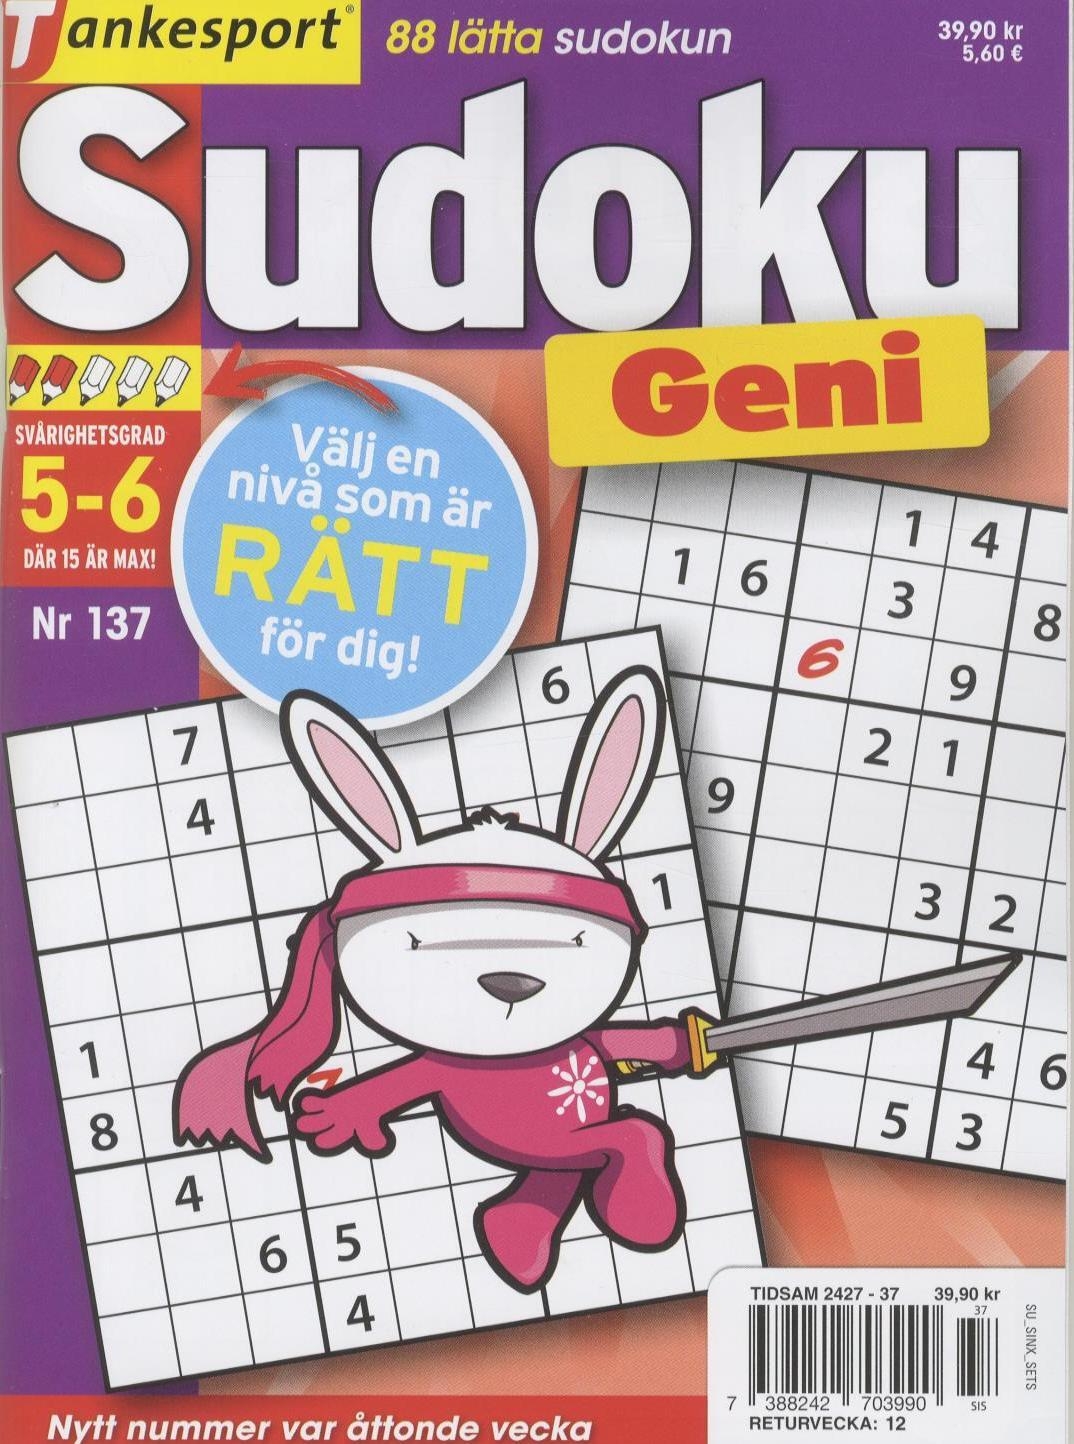 TS Sudoku Geni